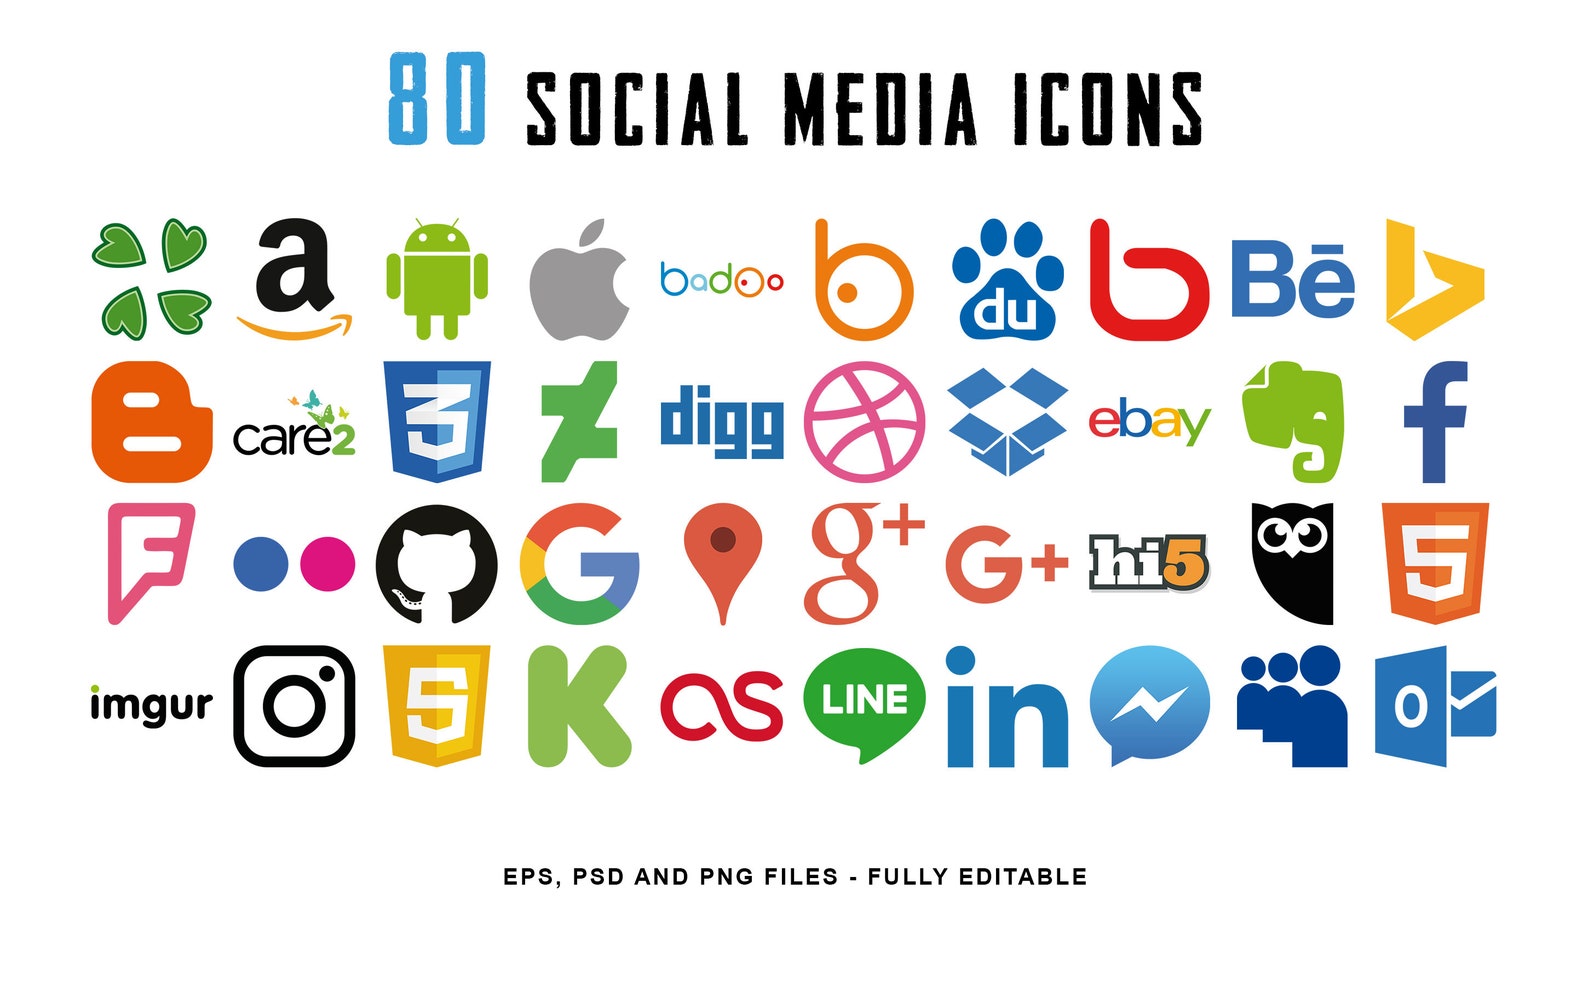 80 Social Media Icons Mega Pack / Website Icons / Blog Icons ...